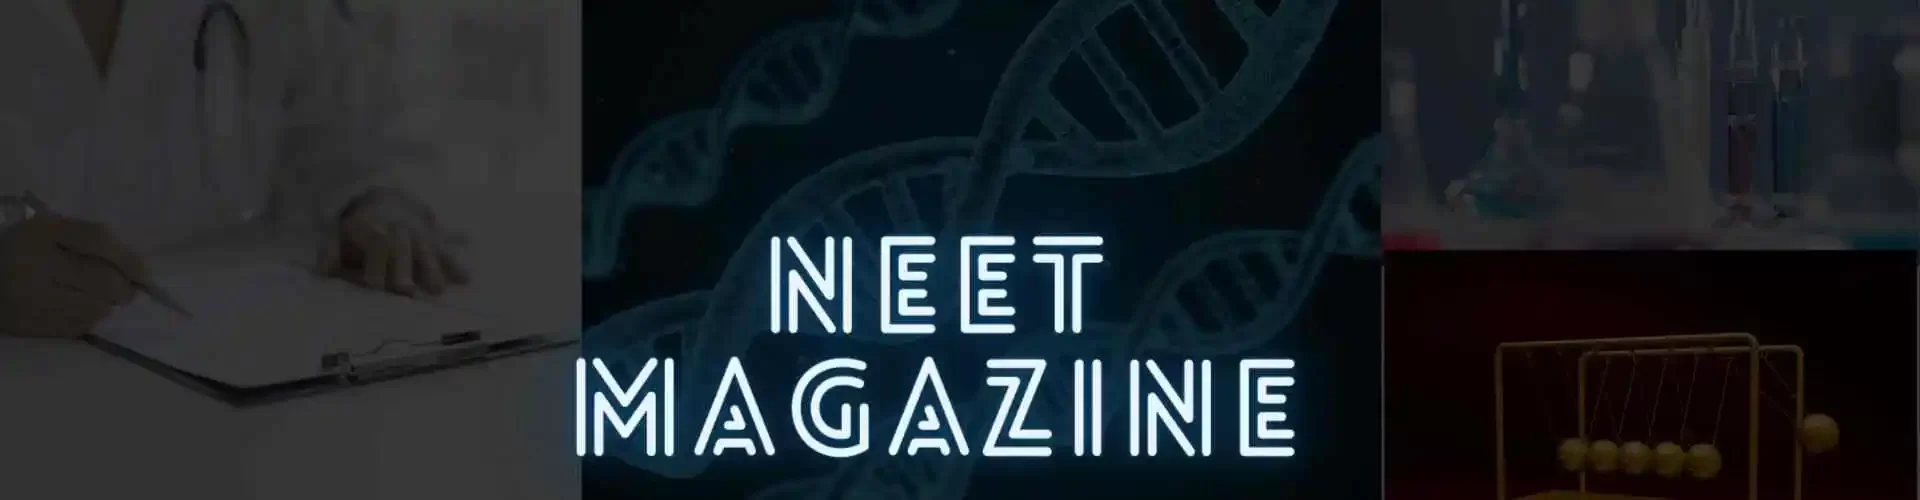 NEET magazine by vizmins